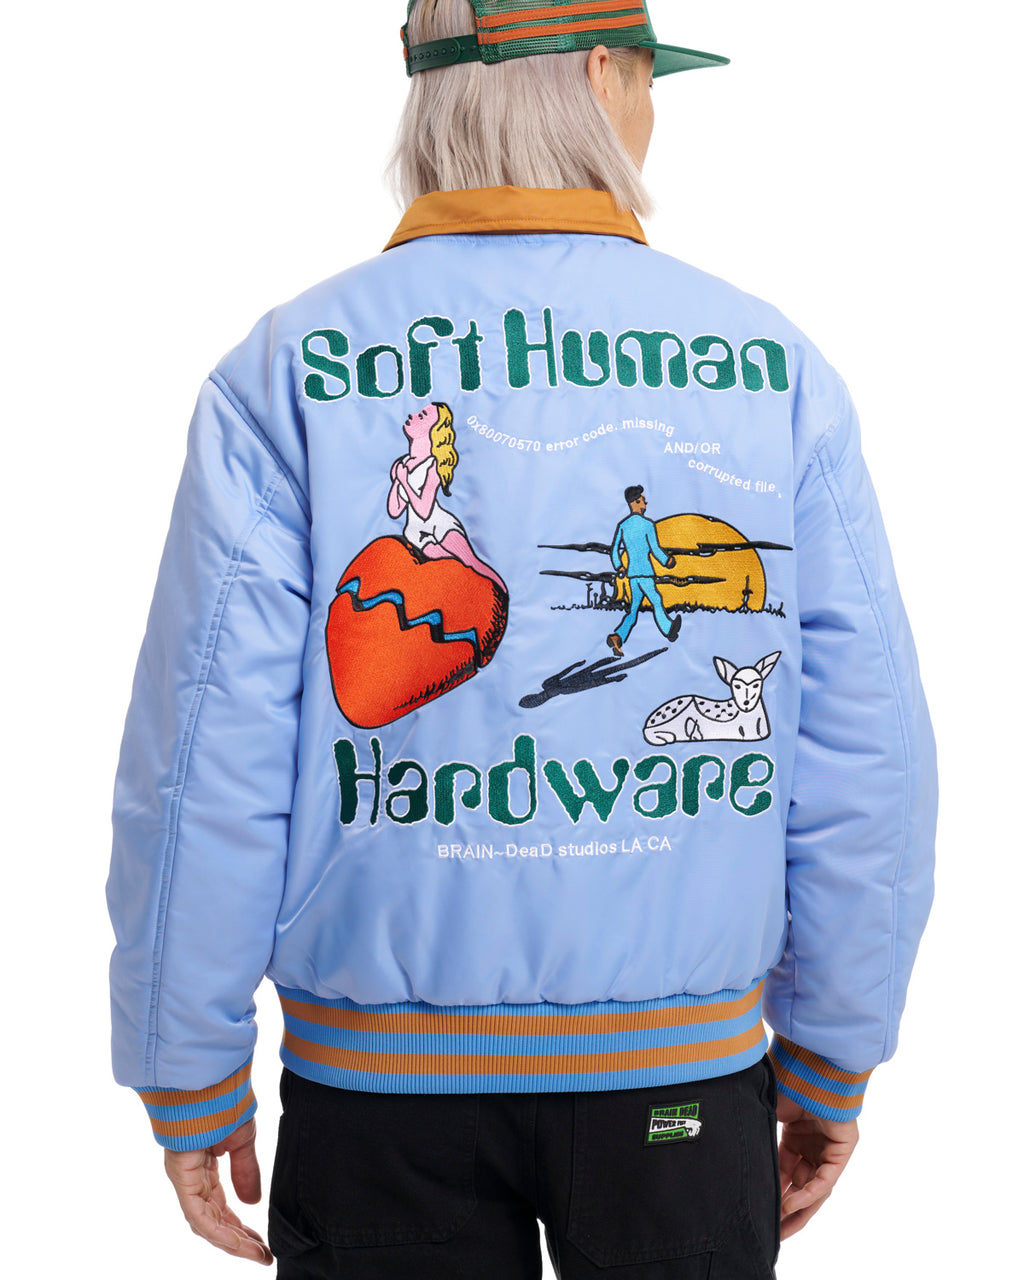 Human Hardware Satin Jacket - Slate Blue 7